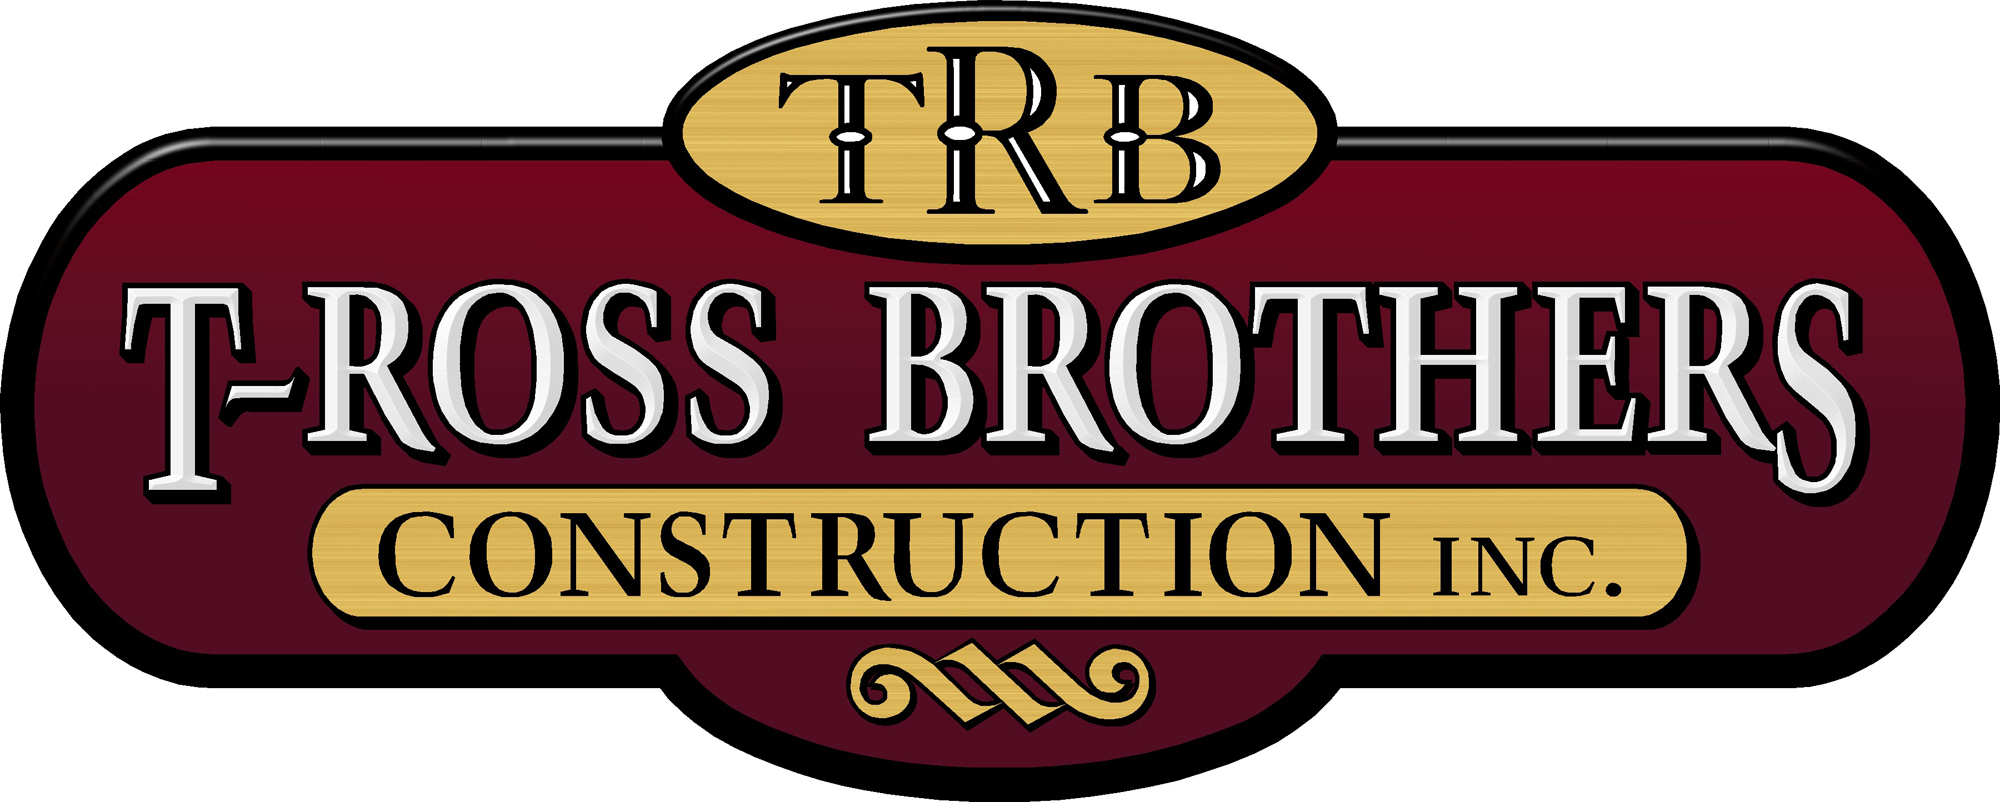 T ROSS BROTHERS CONSTRUCTION INC company logo